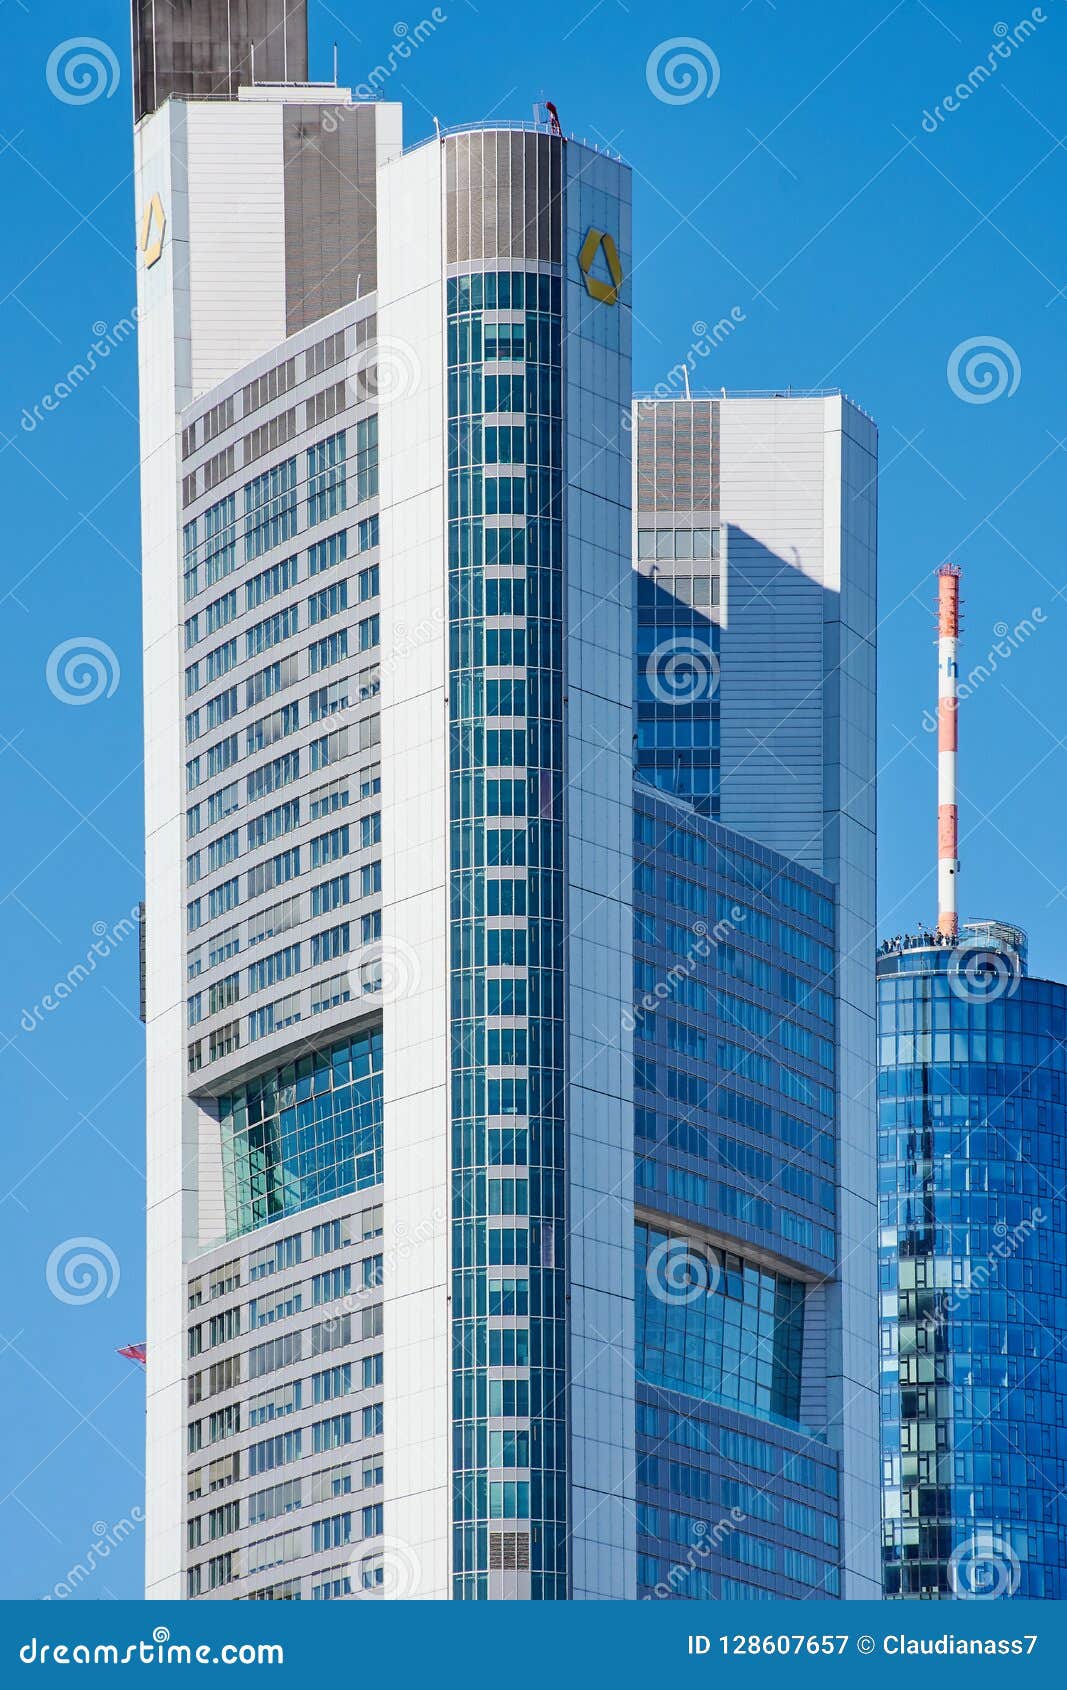 Commerzbank Skyscraper In Frankfurt Germany Editorial Photography Image Of Bank Landmark 128607657